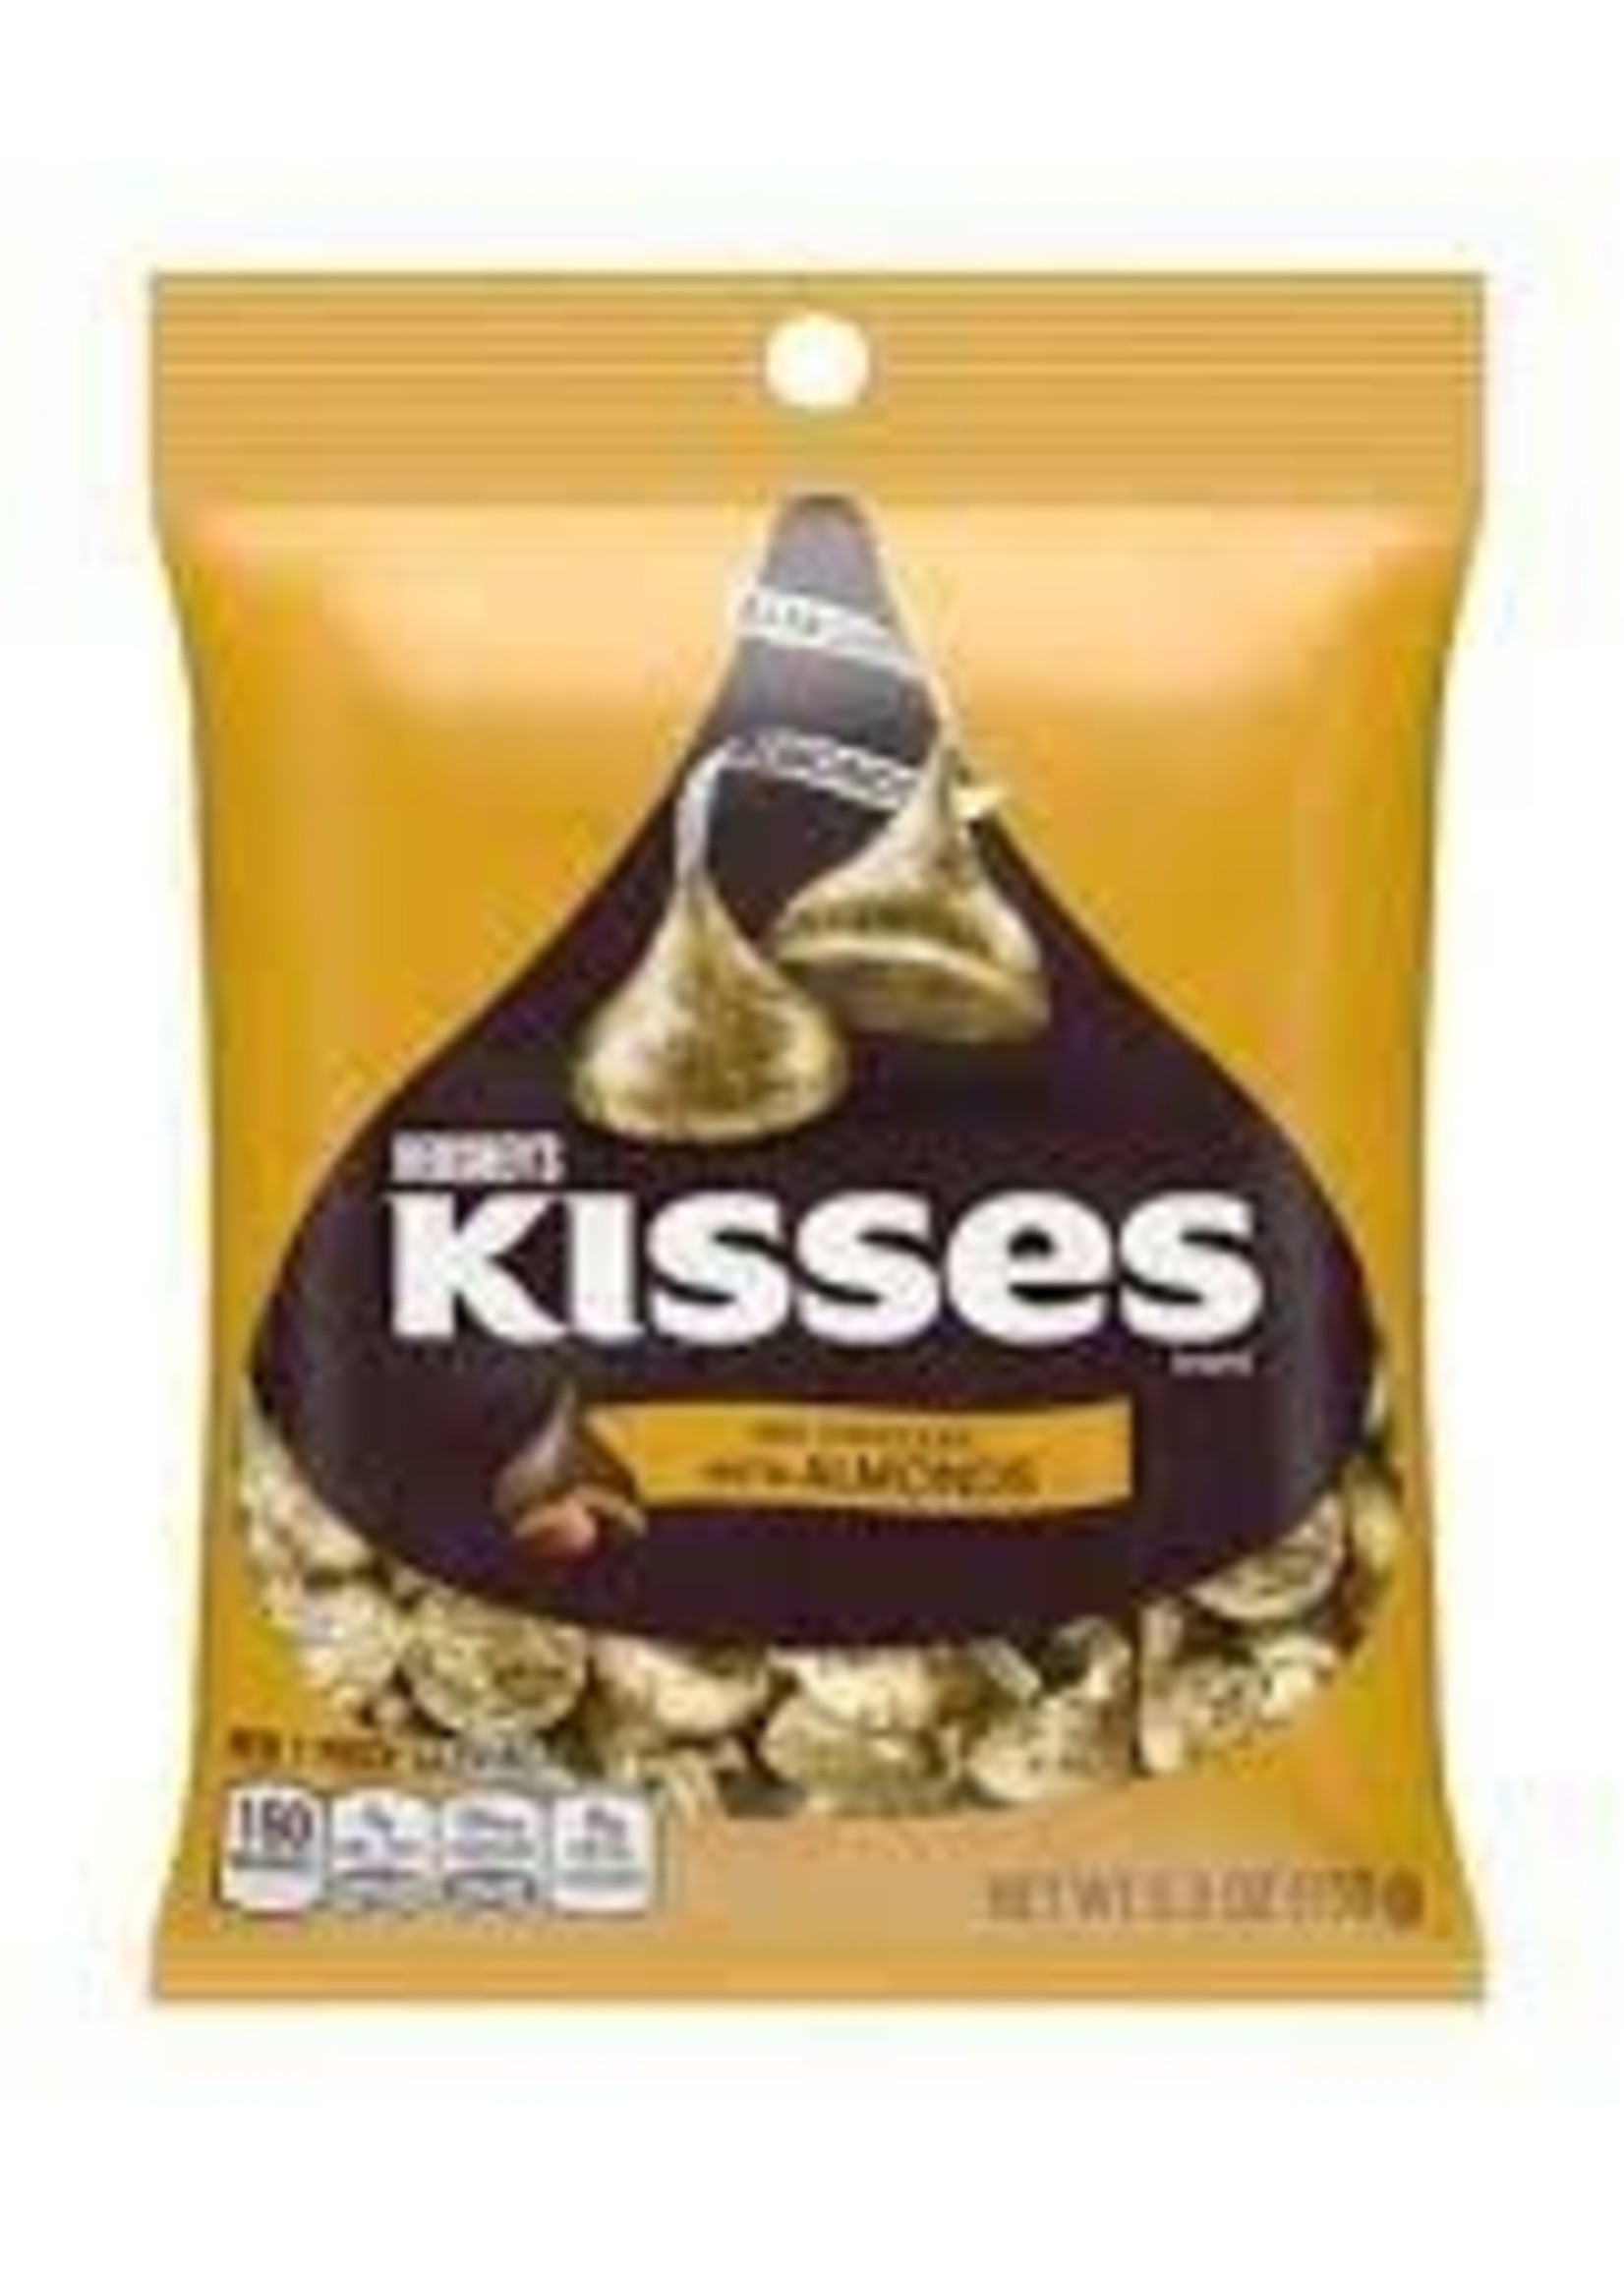 Hershey's Hershey's Kisses Milk Chocolate with Almonds 150g